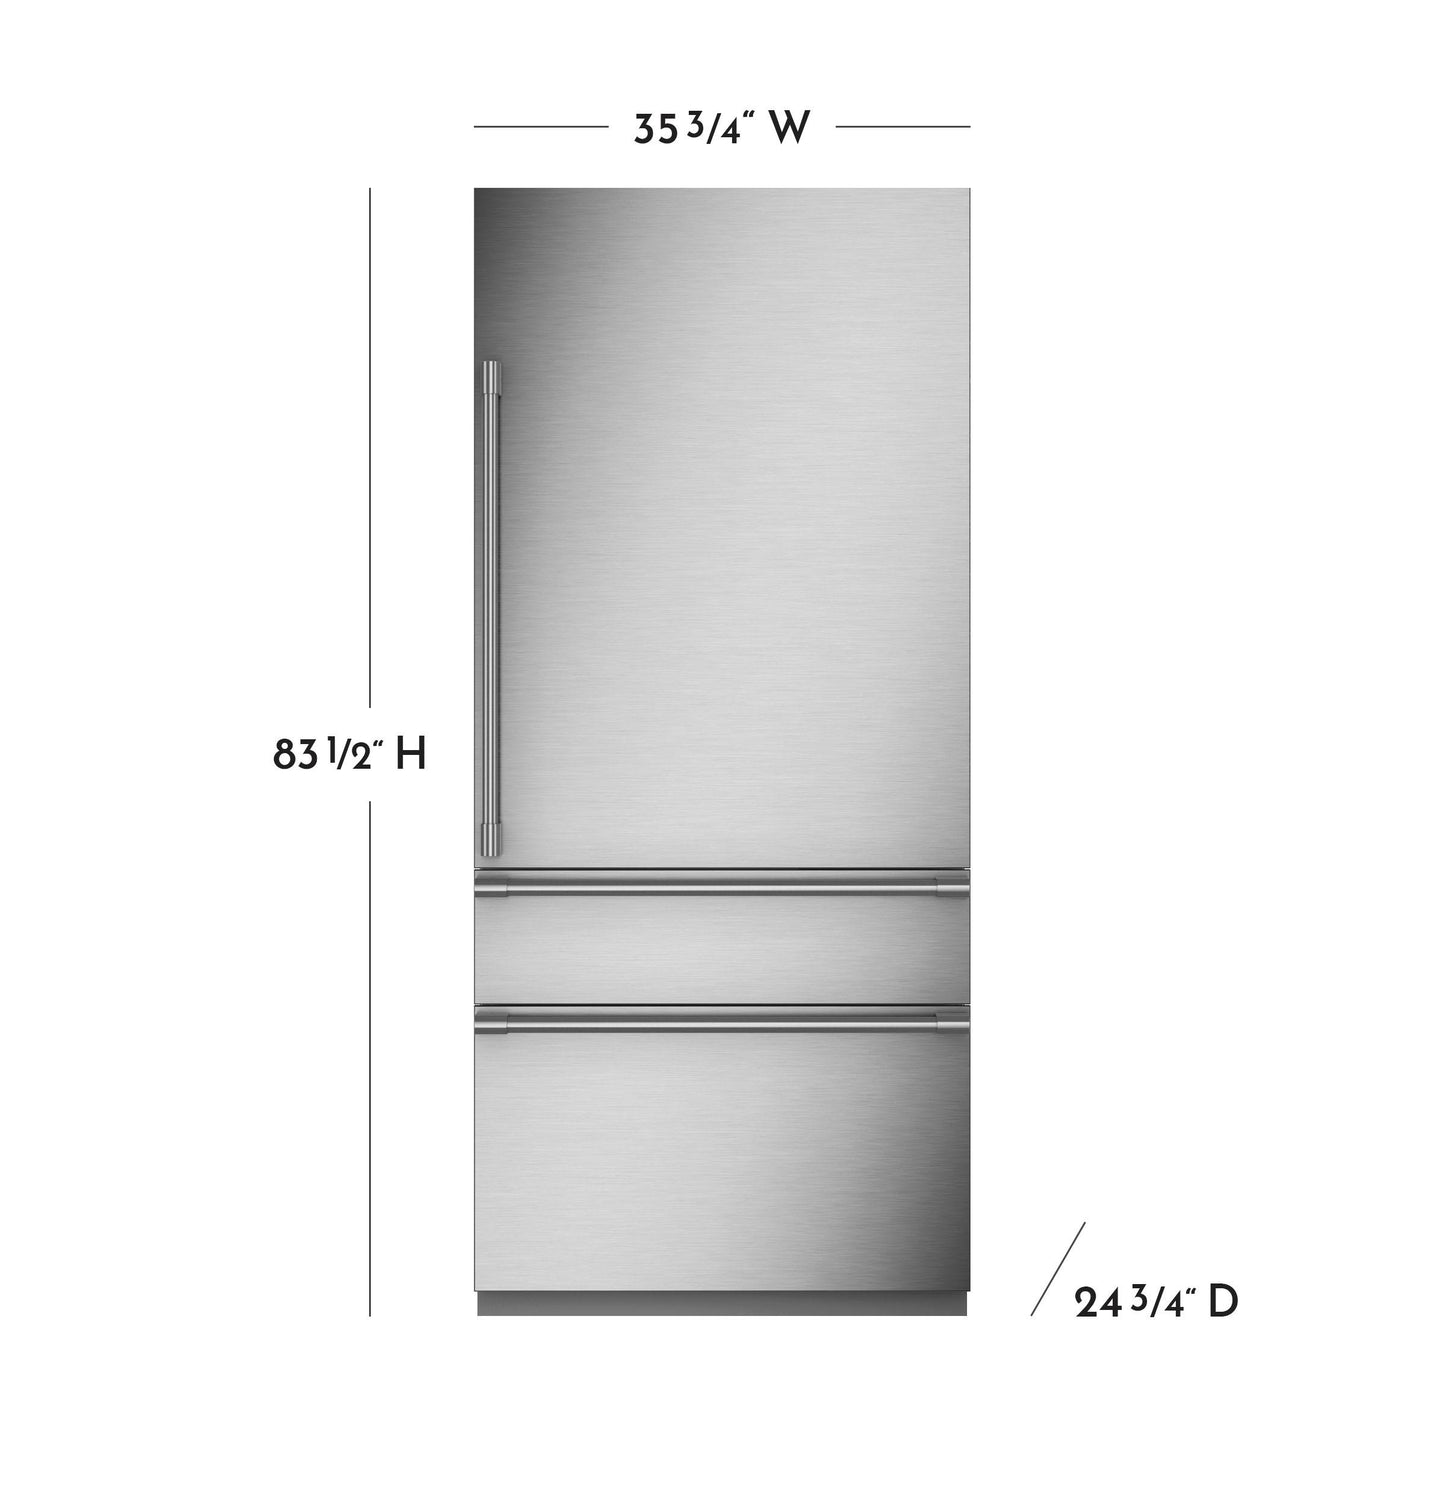 Monogram ZIC363NBVRH Monogram 36" Integrated Bottom-Freezer Refrigerator